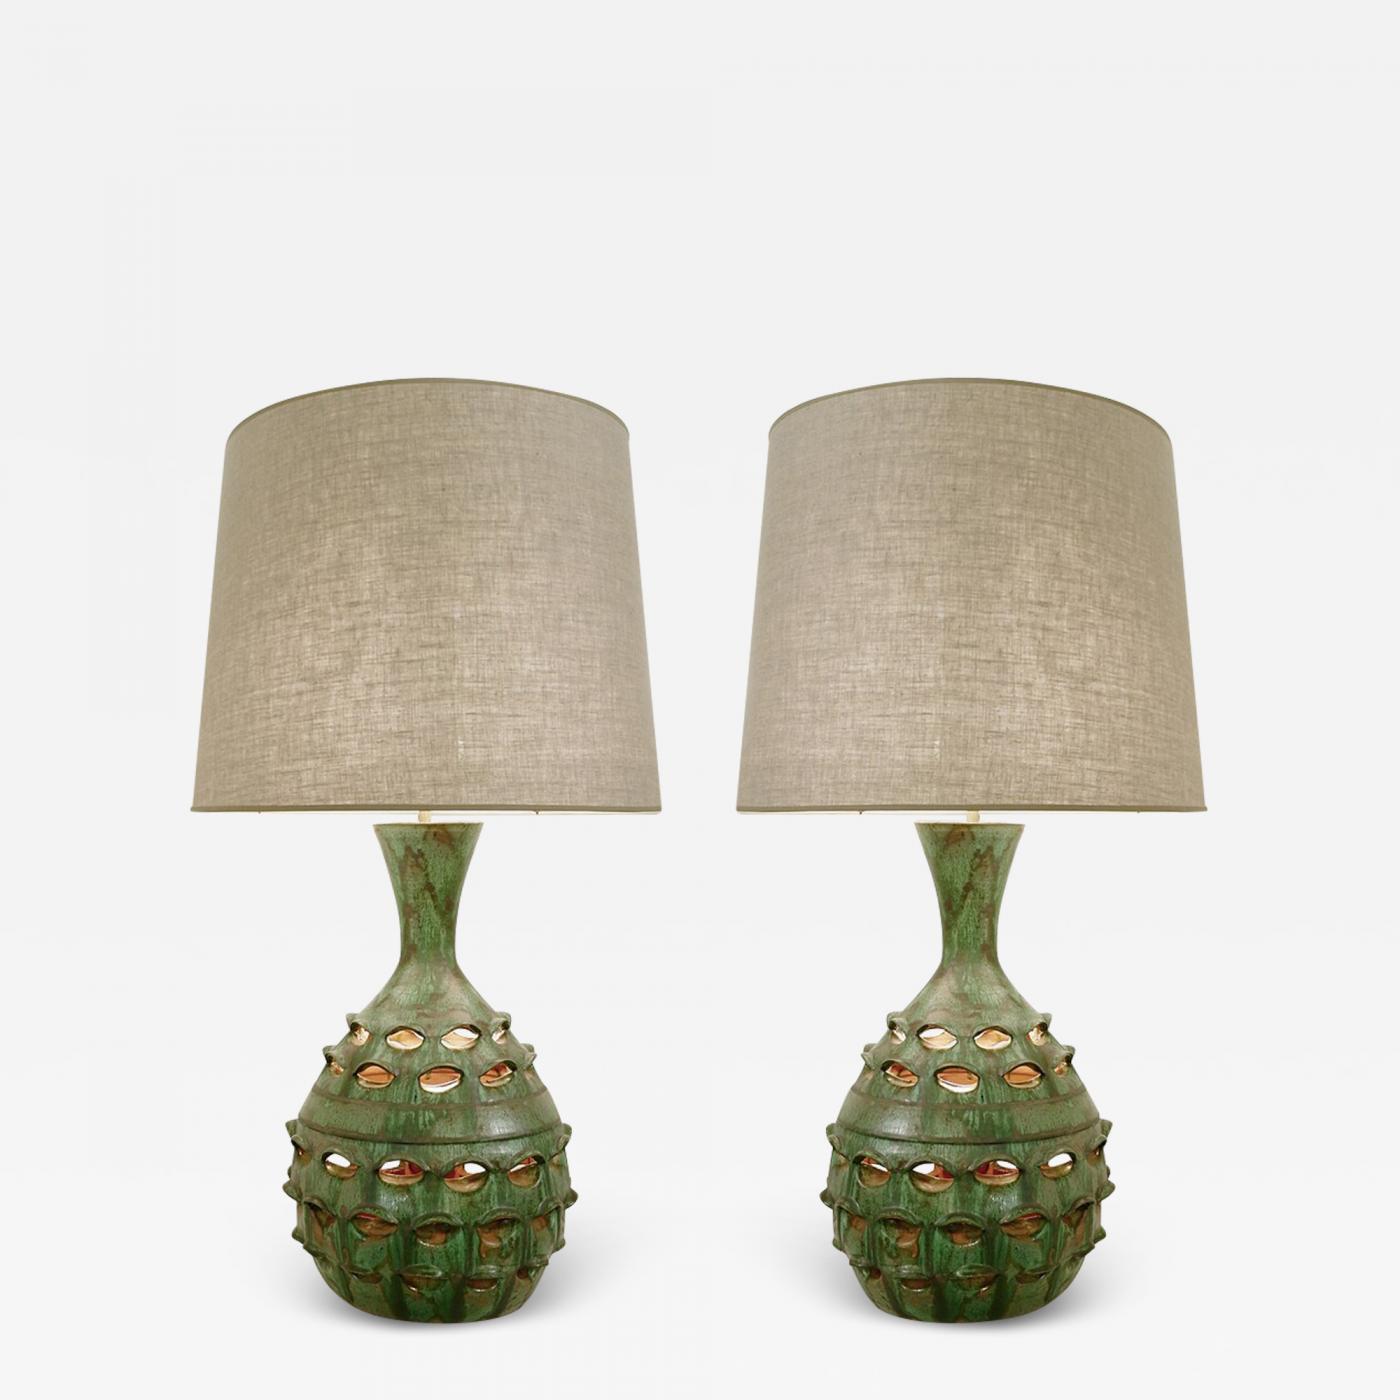 Pair of Mid Century Ceramic Table Lamps with Illuminated Artichoke Base